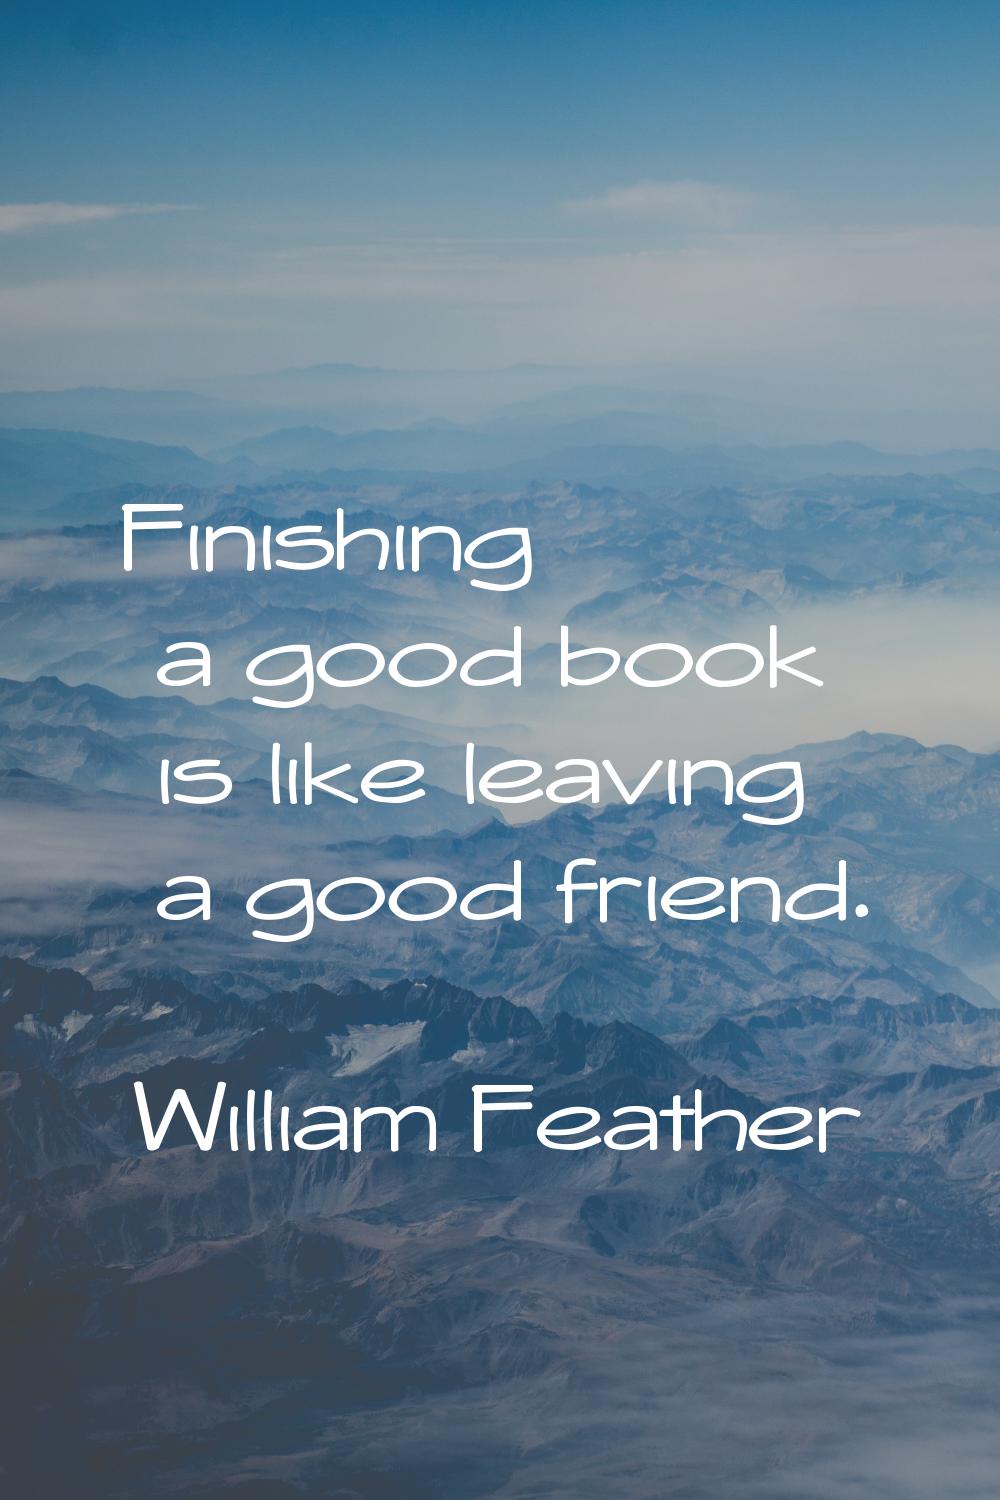 Finishing a good book is like leaving a good friend.